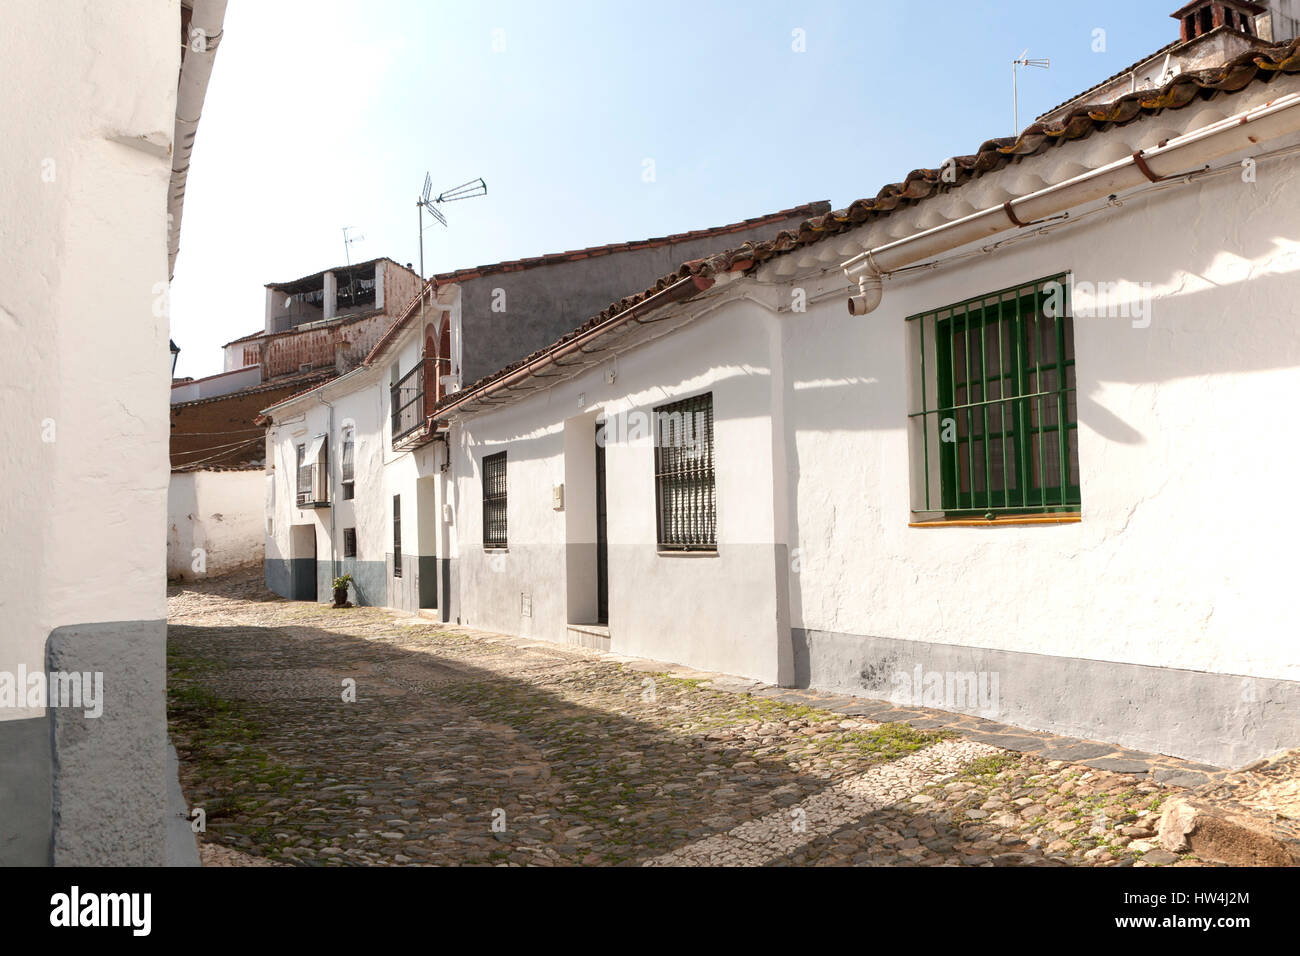 Village street and houses, Linares de la Sierra, Sierra de Aracena, Huelva province, Spain Stock Photo